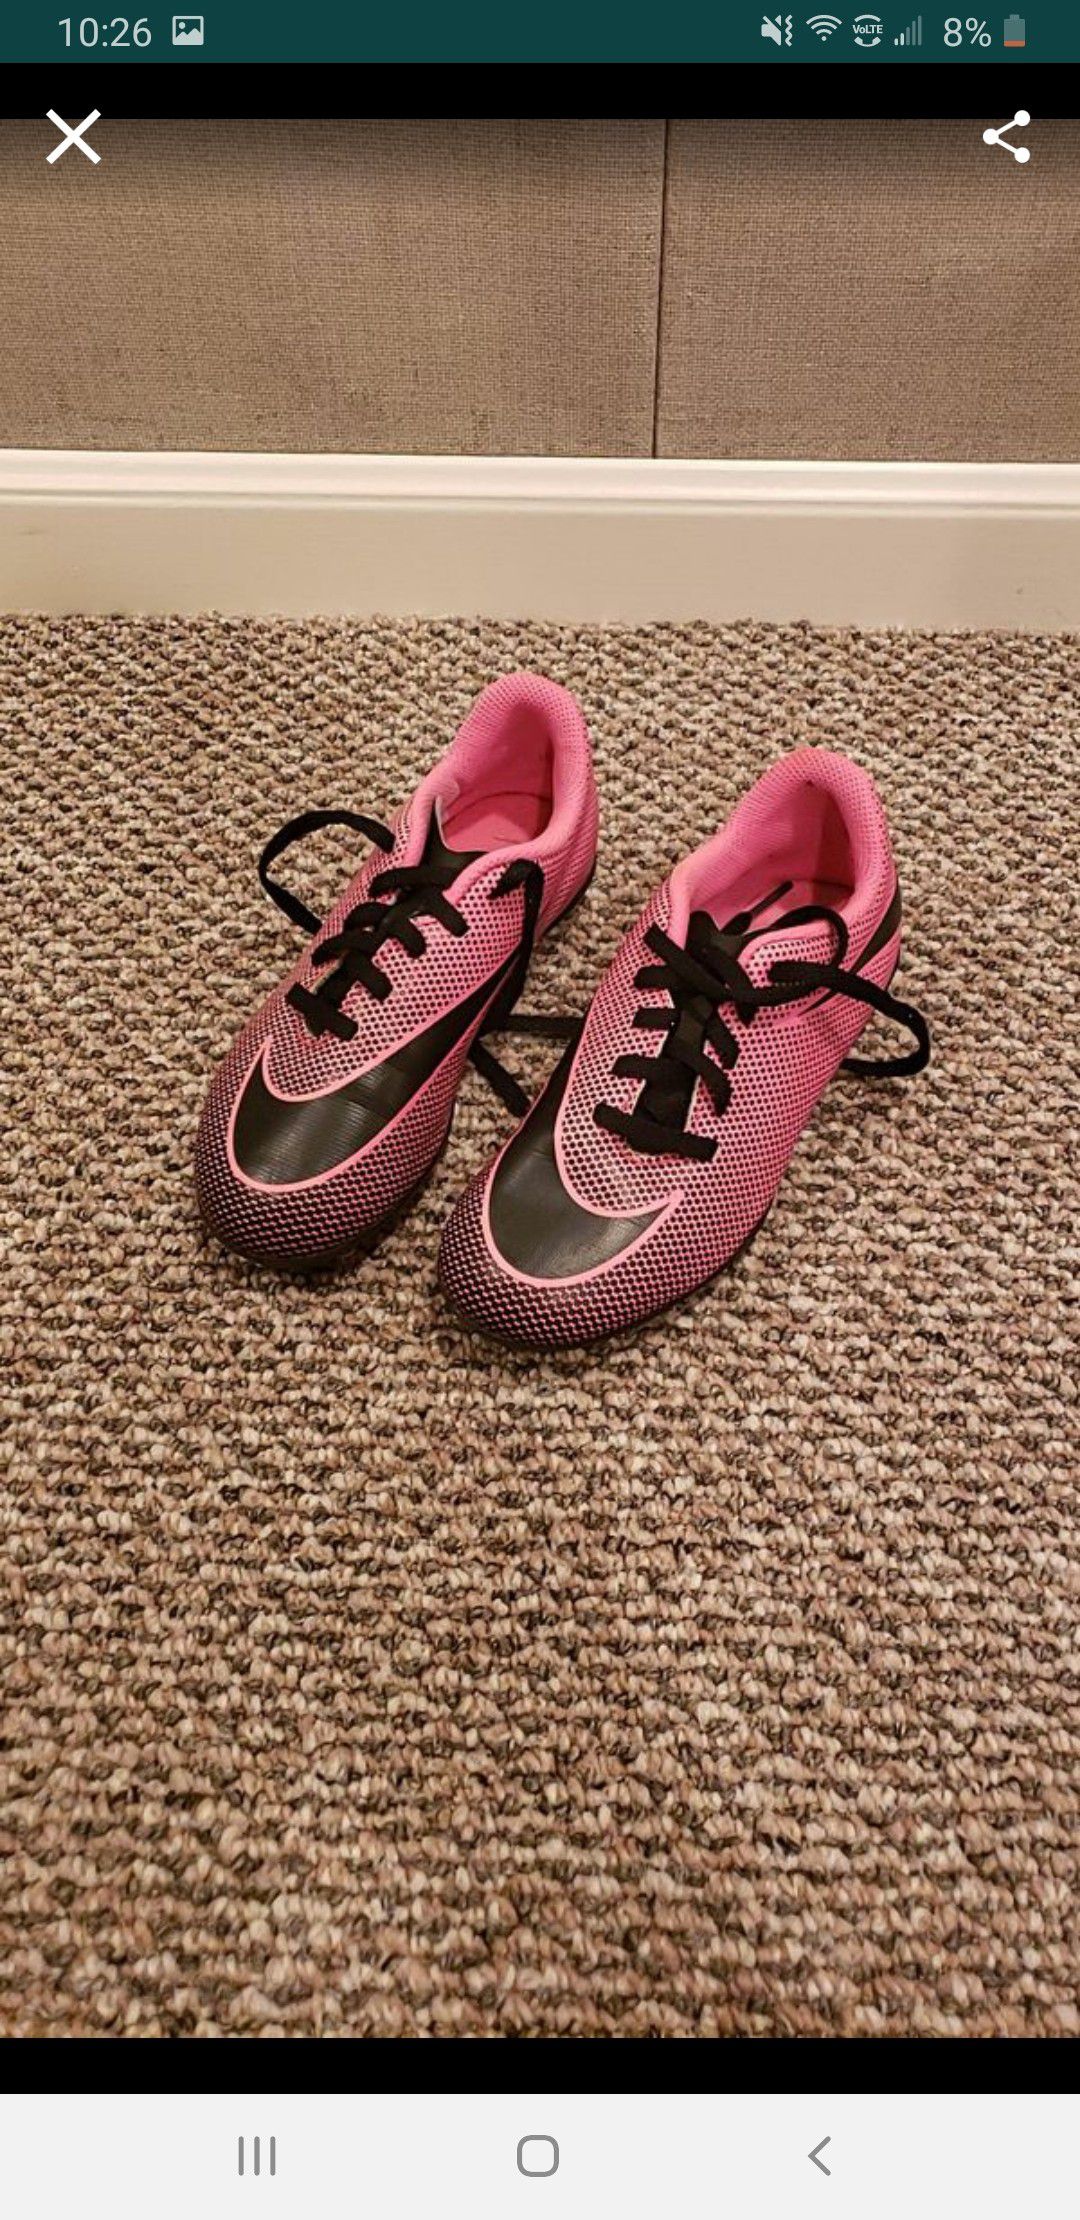 Girls Nike soccer shoes - size 13c